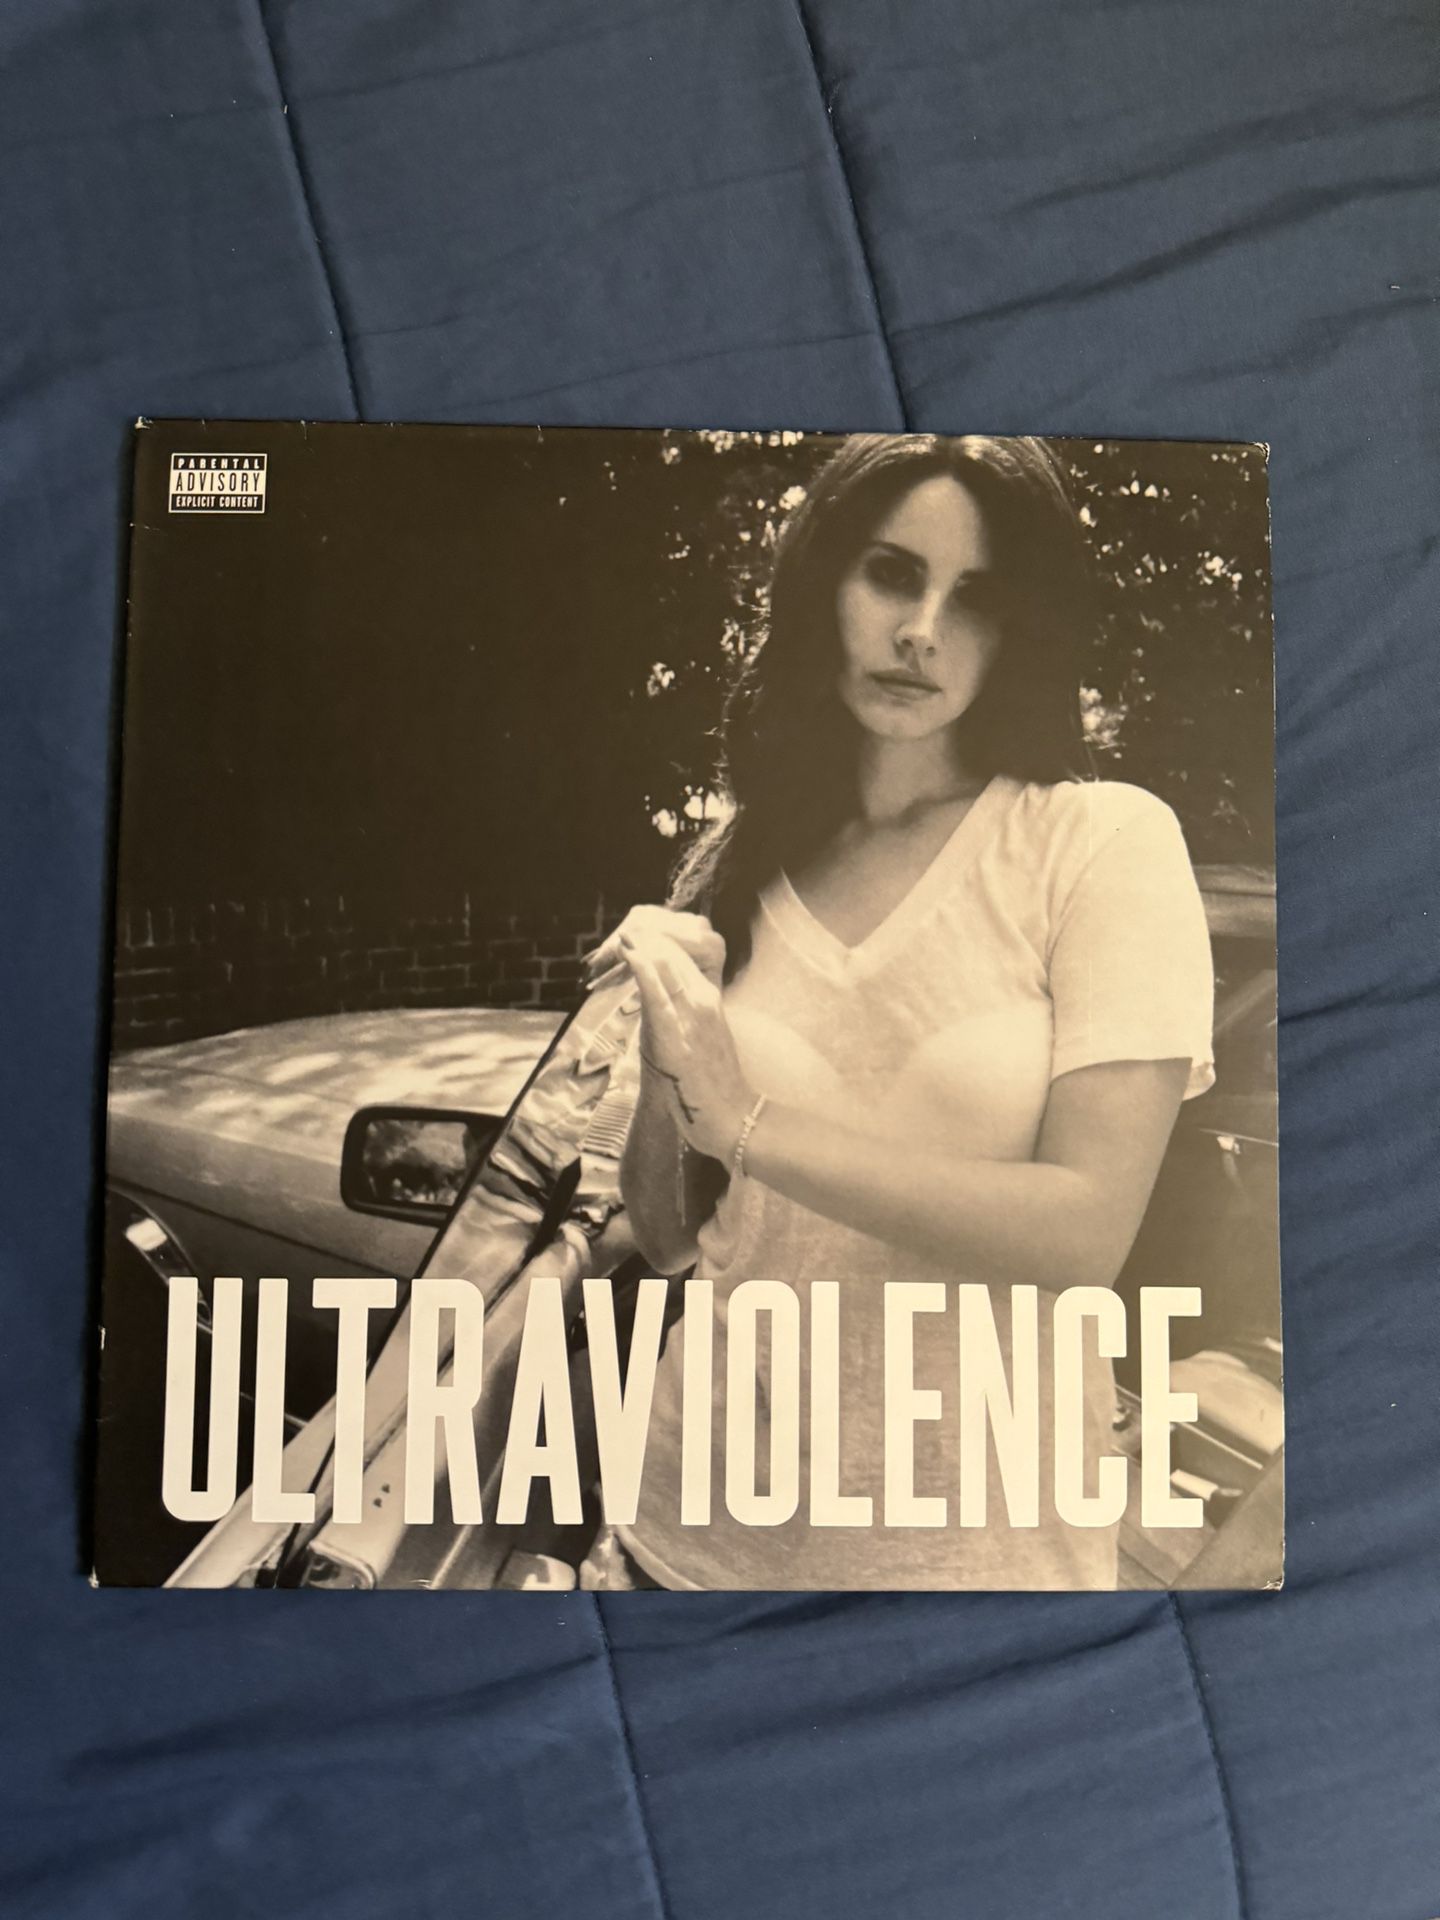 Lana Del Rey - Ultraviolence vinyl